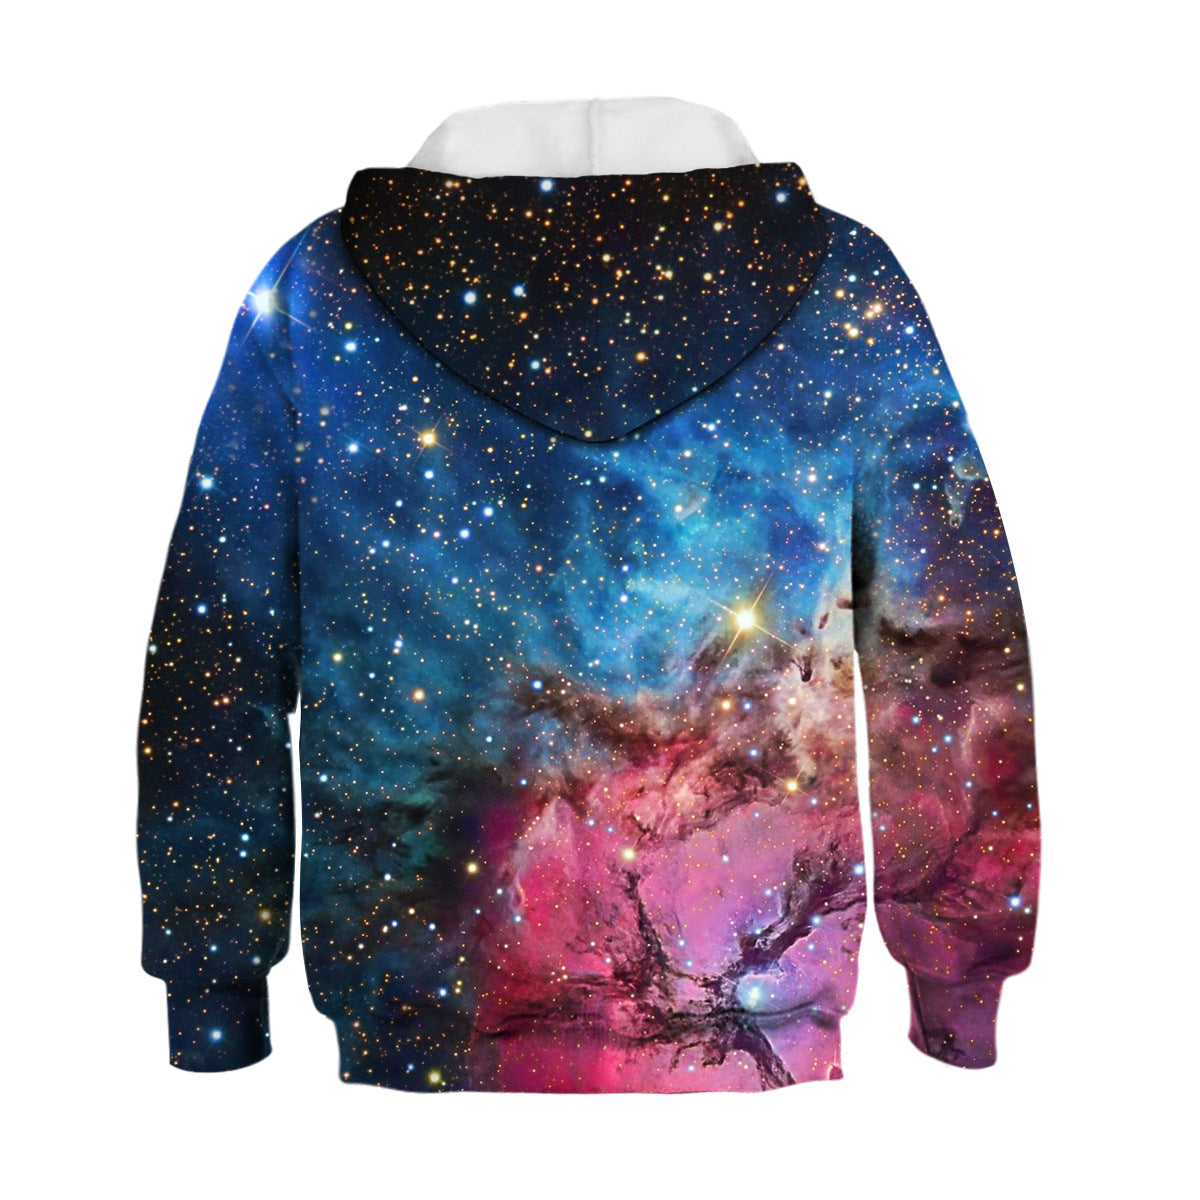 Unisex Galaxy 3d Digital Print Pullover Hoodie Hooded Sweatshirt Nfgoods - galaxy shirt girl boy roblox